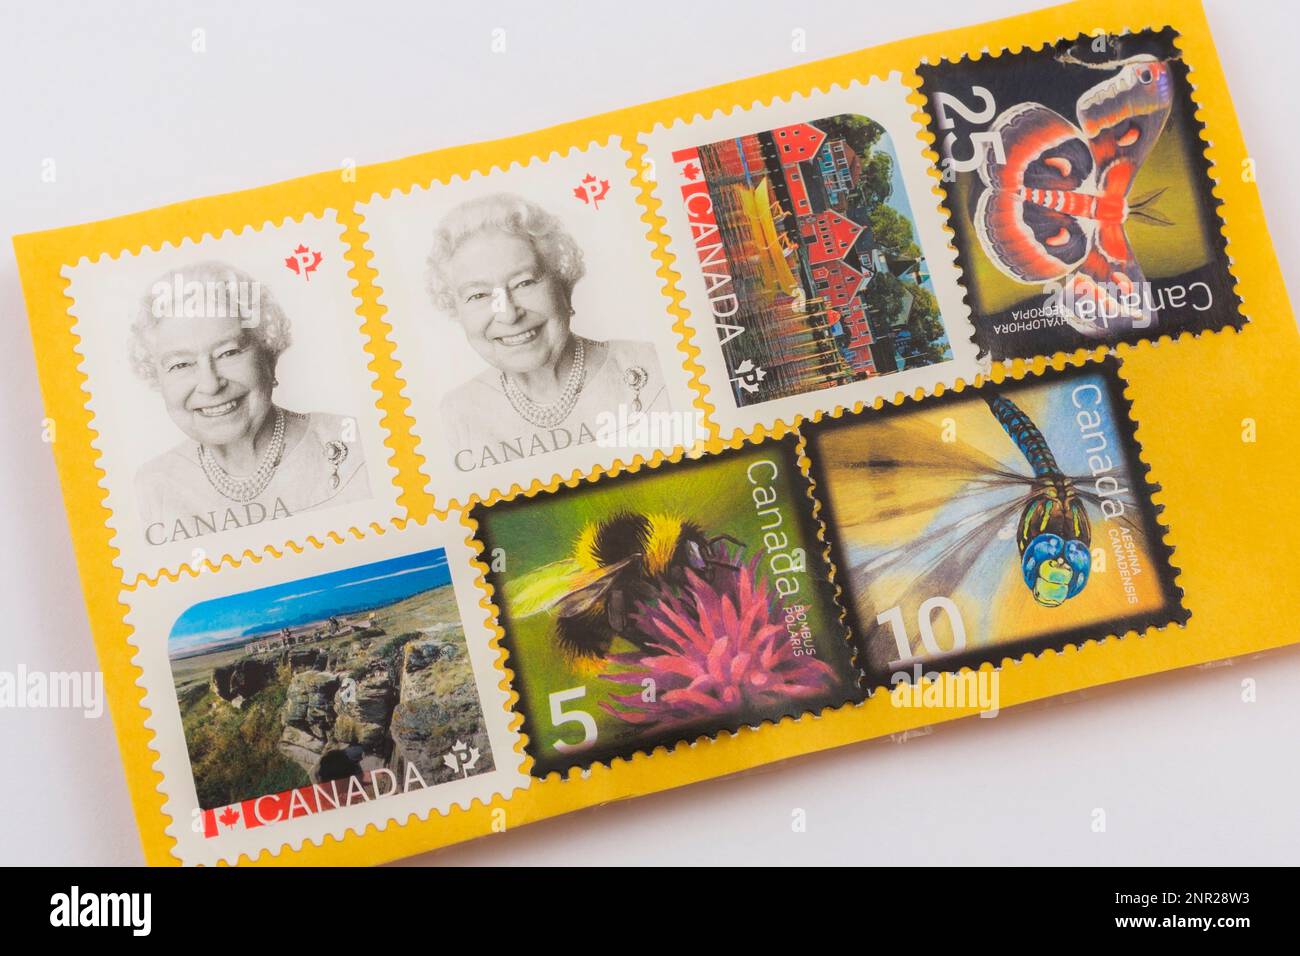 Vari francobolli canadesi su busta di carta postale gialla. Foto Stock